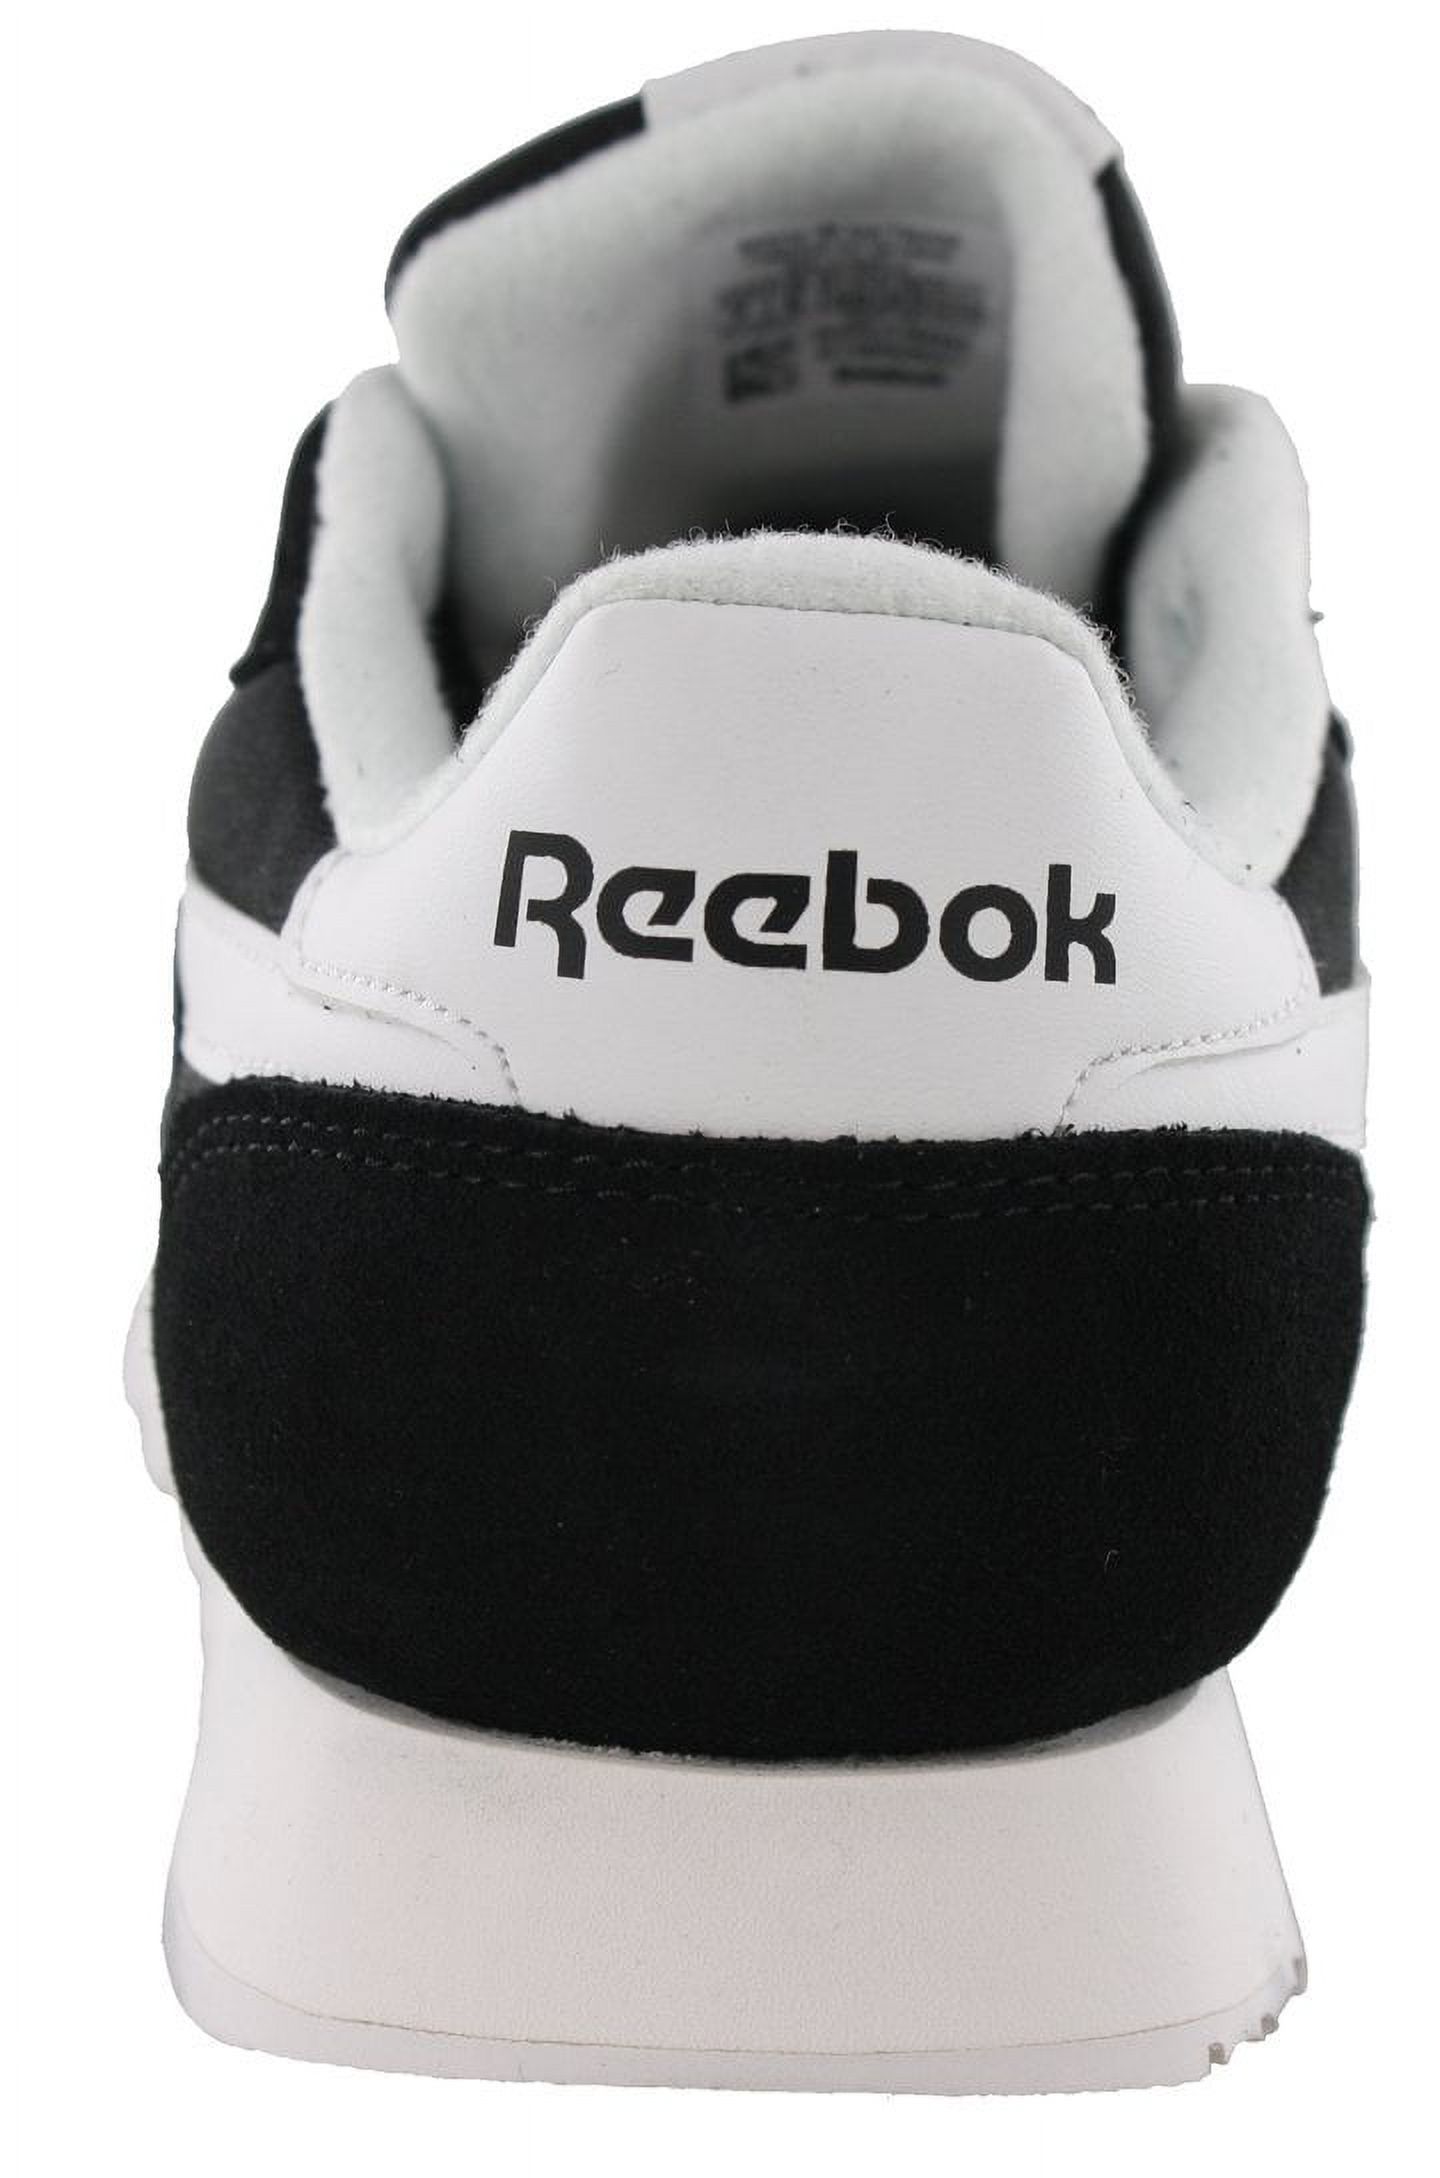 Reebok Men's Classic Royal Nylon Walking Shoes - image 4 of 5